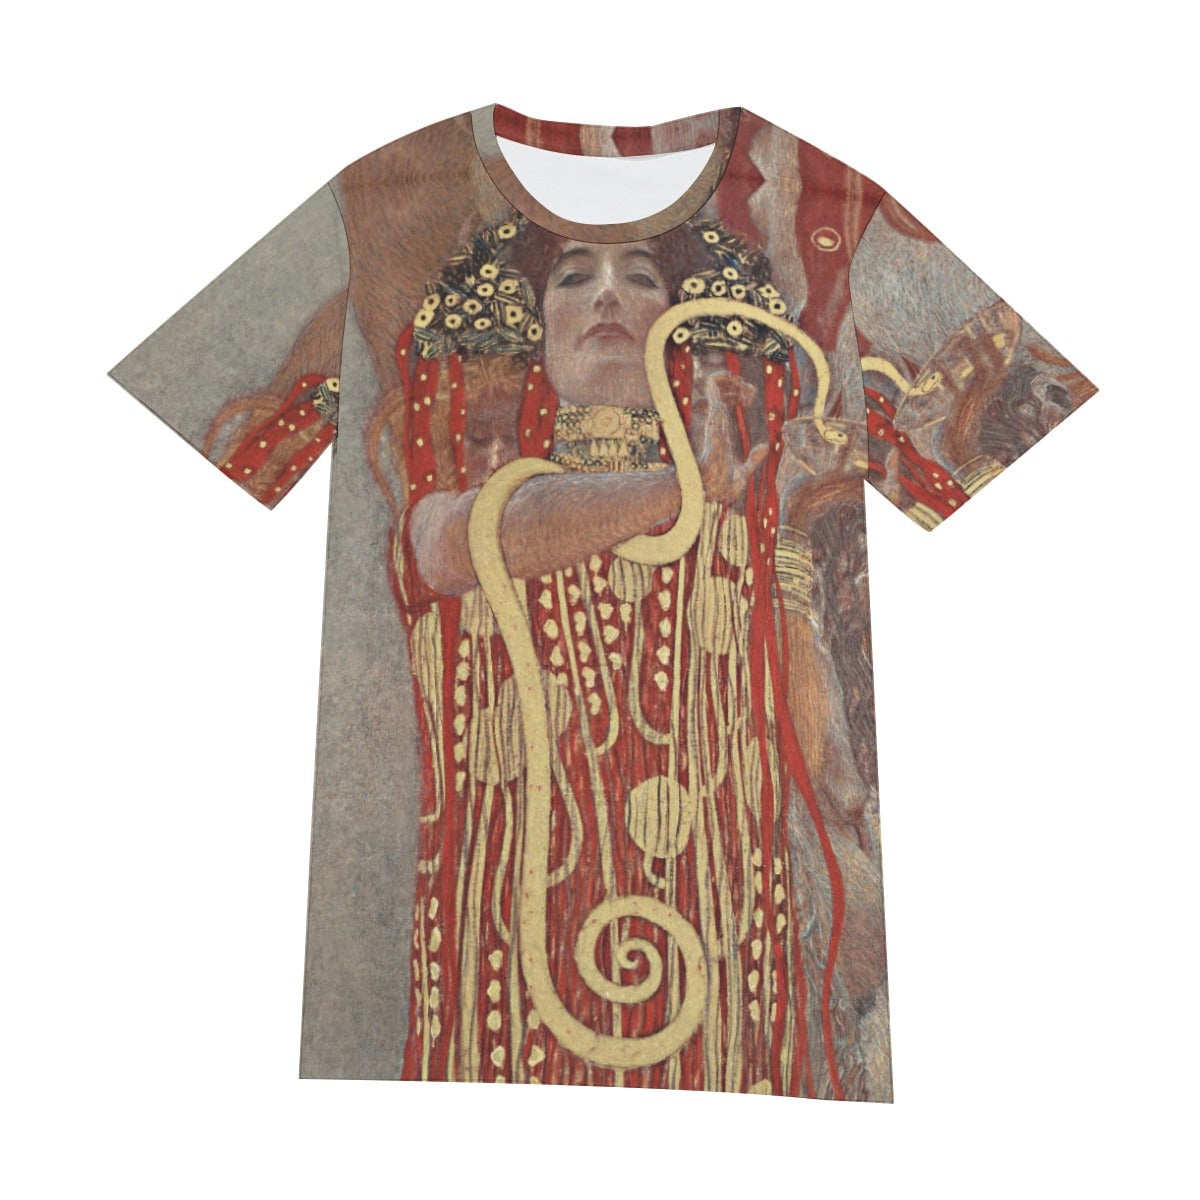 Gustav Klimt’s Hygieia T-Shirt - Famous Artwork Tee